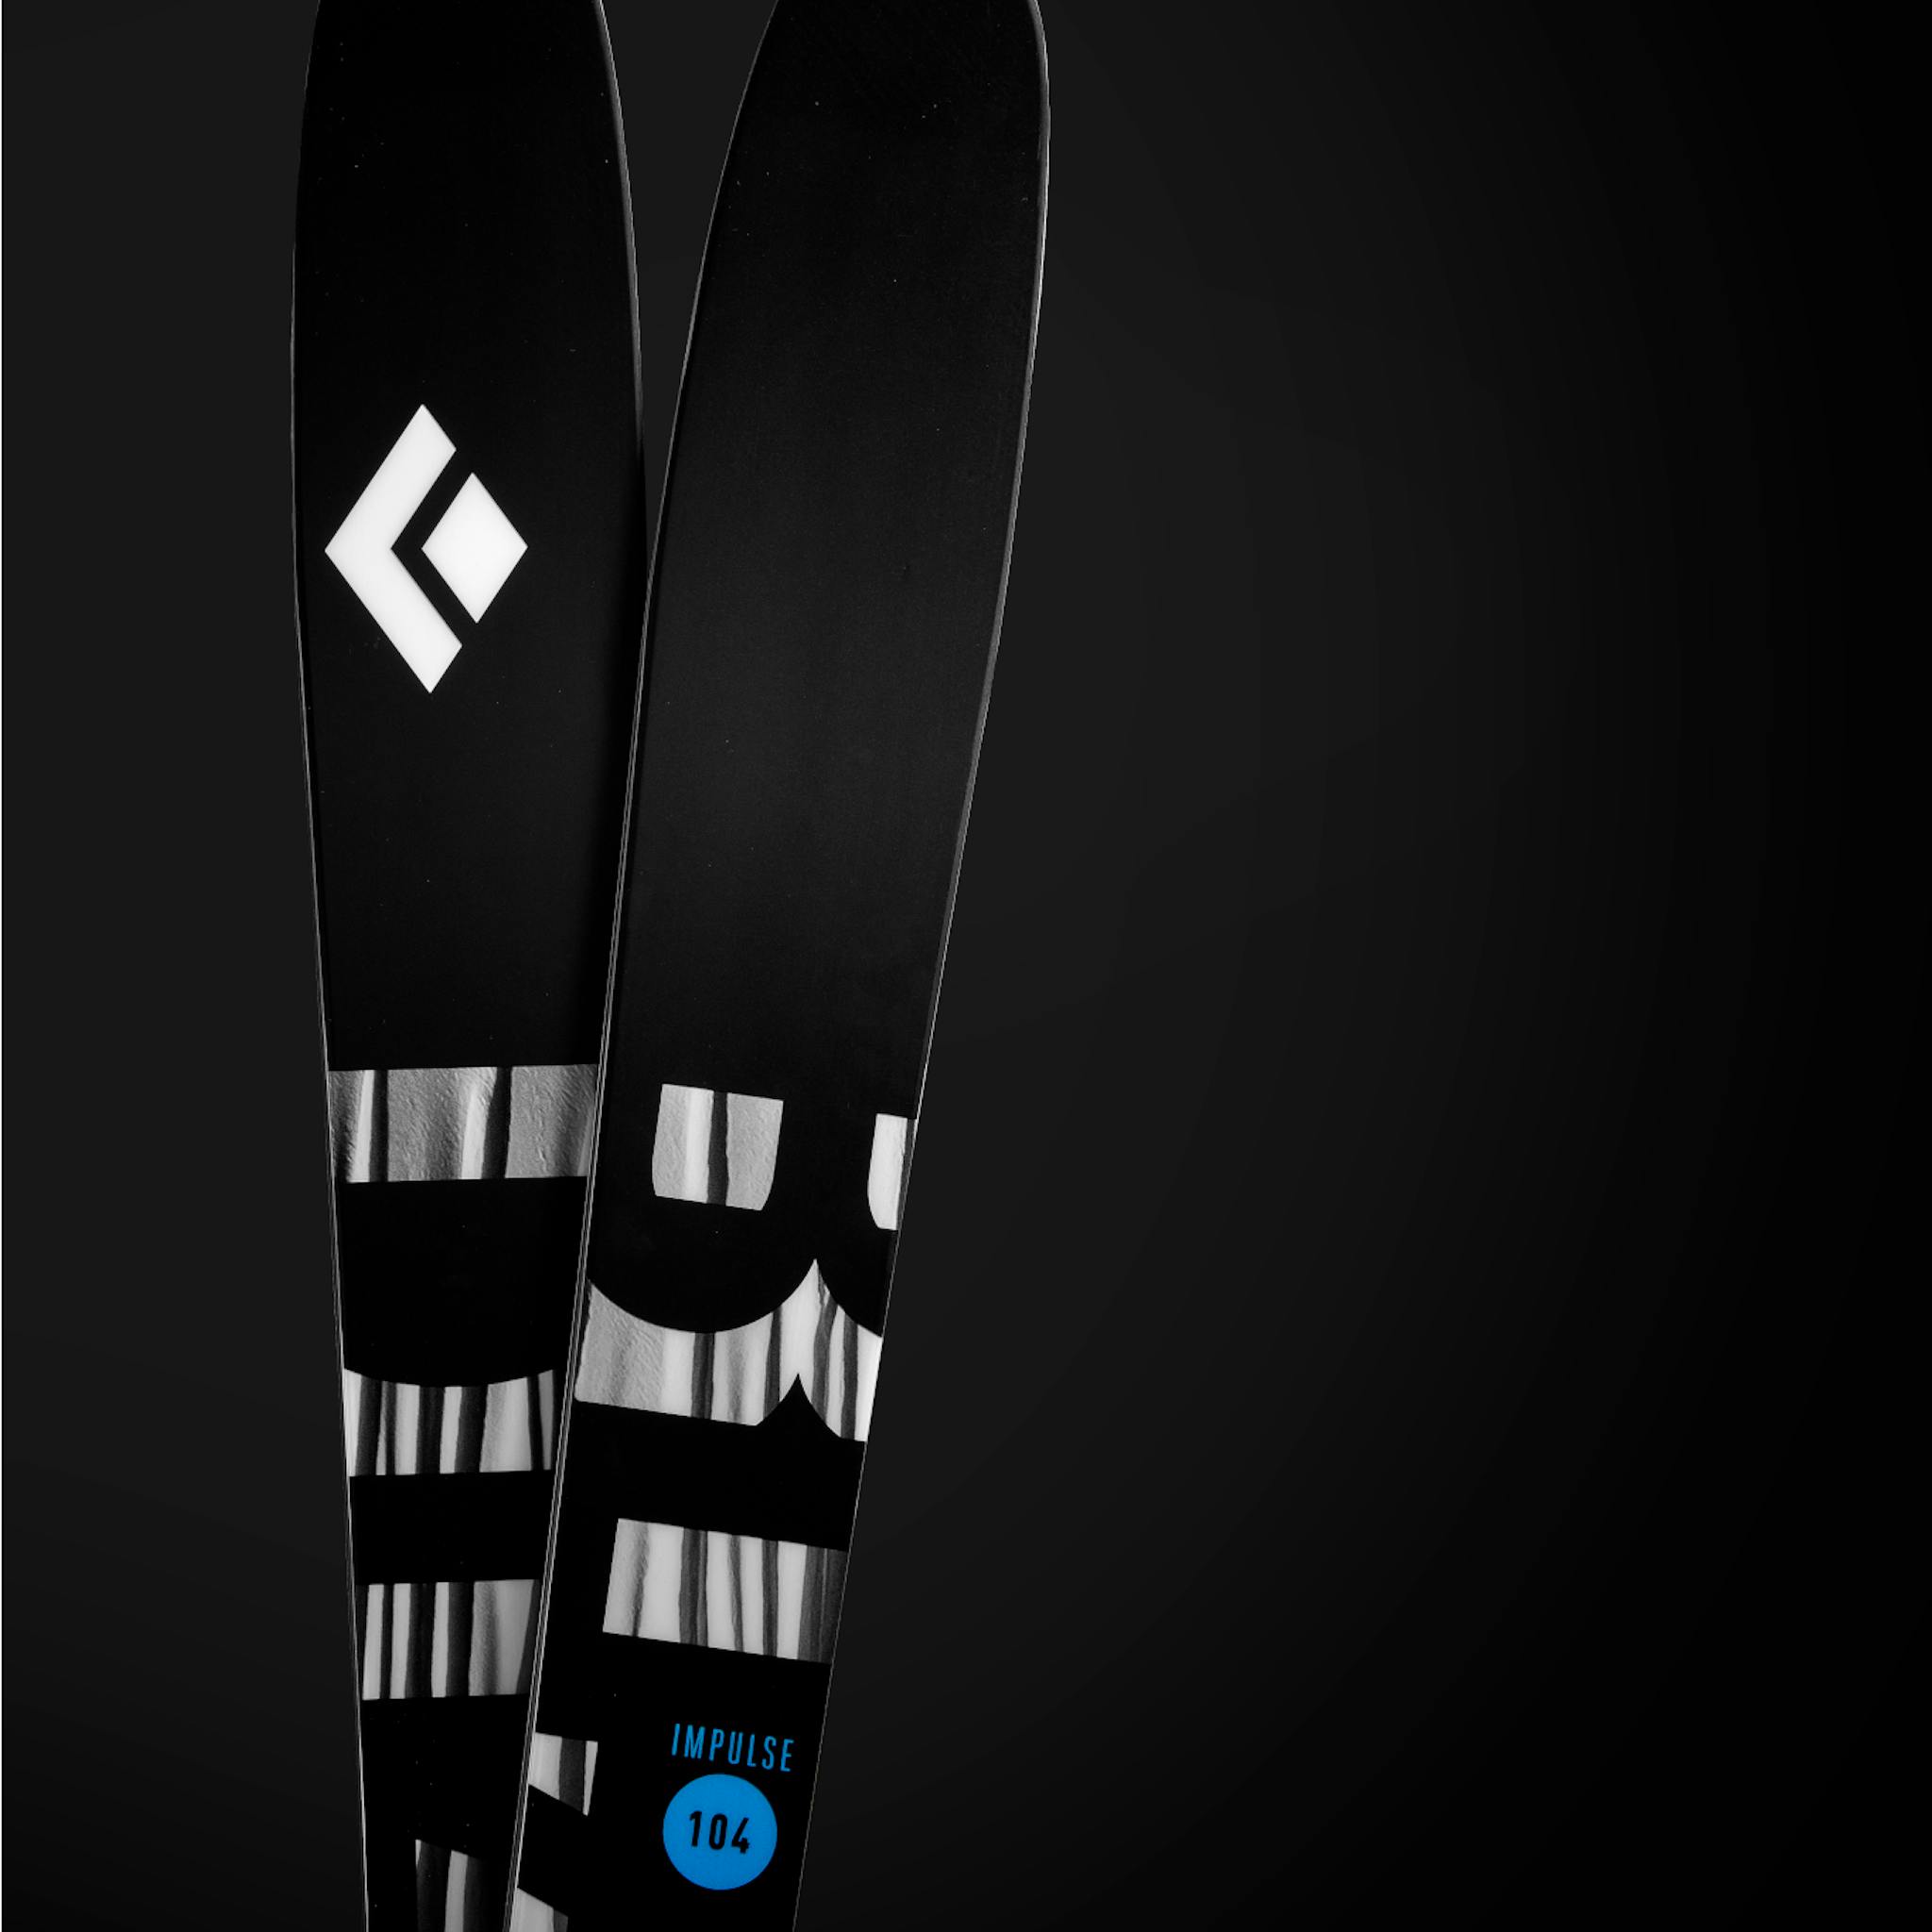 Two crisscrossing Impulse 104 skis.